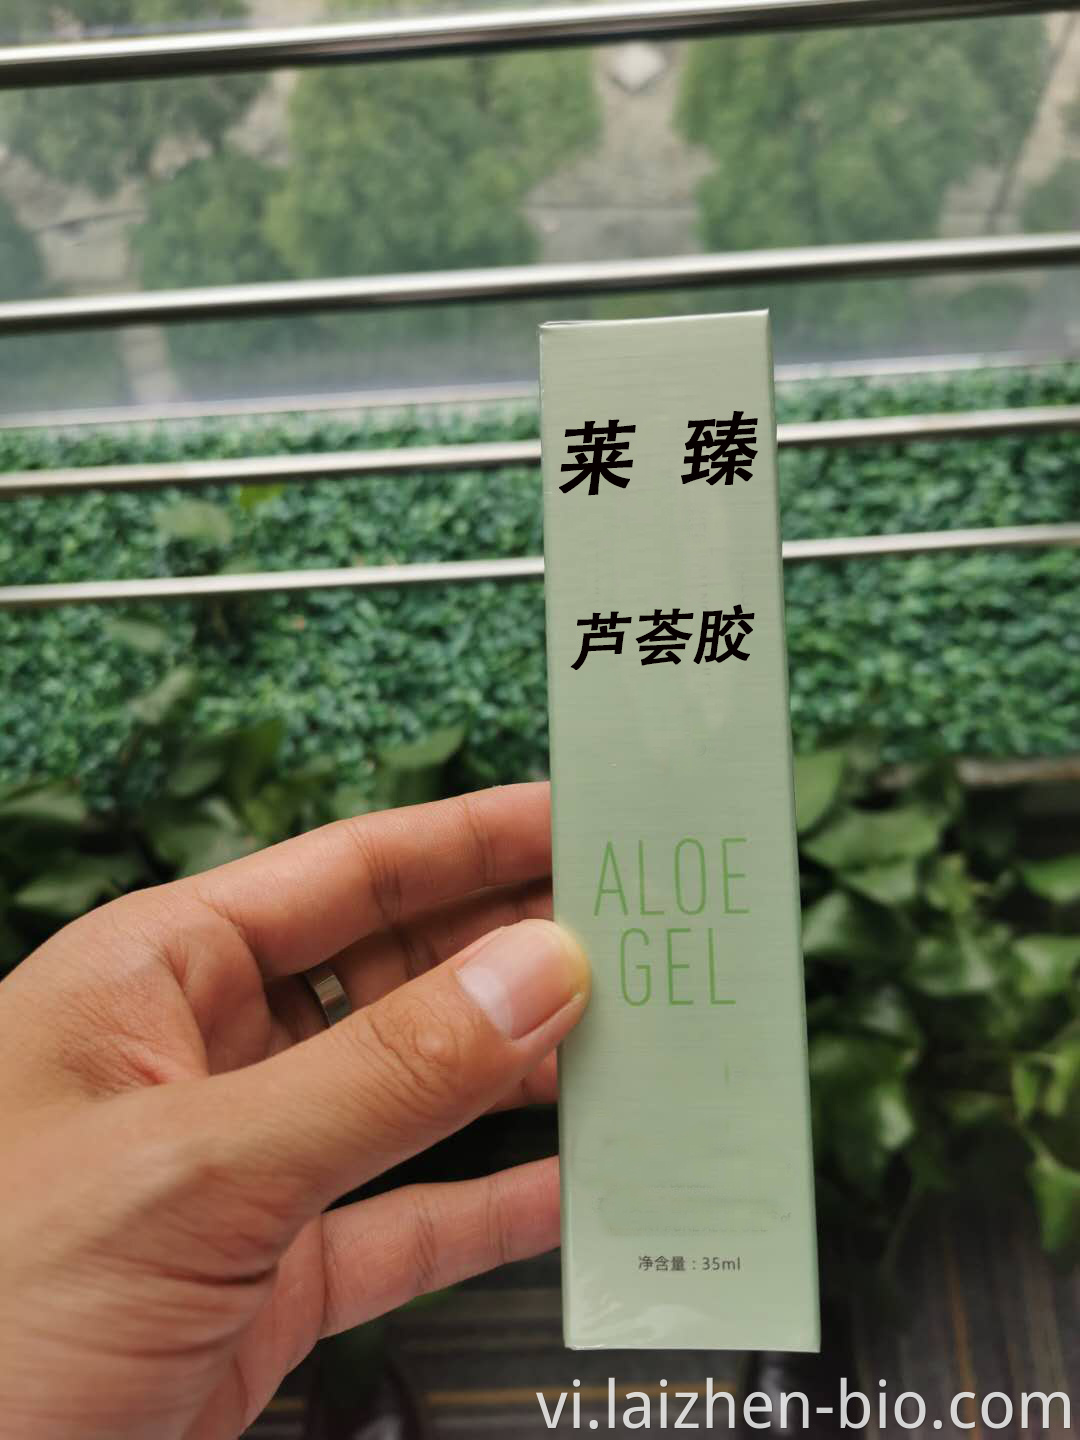 aloe vera gel from nature